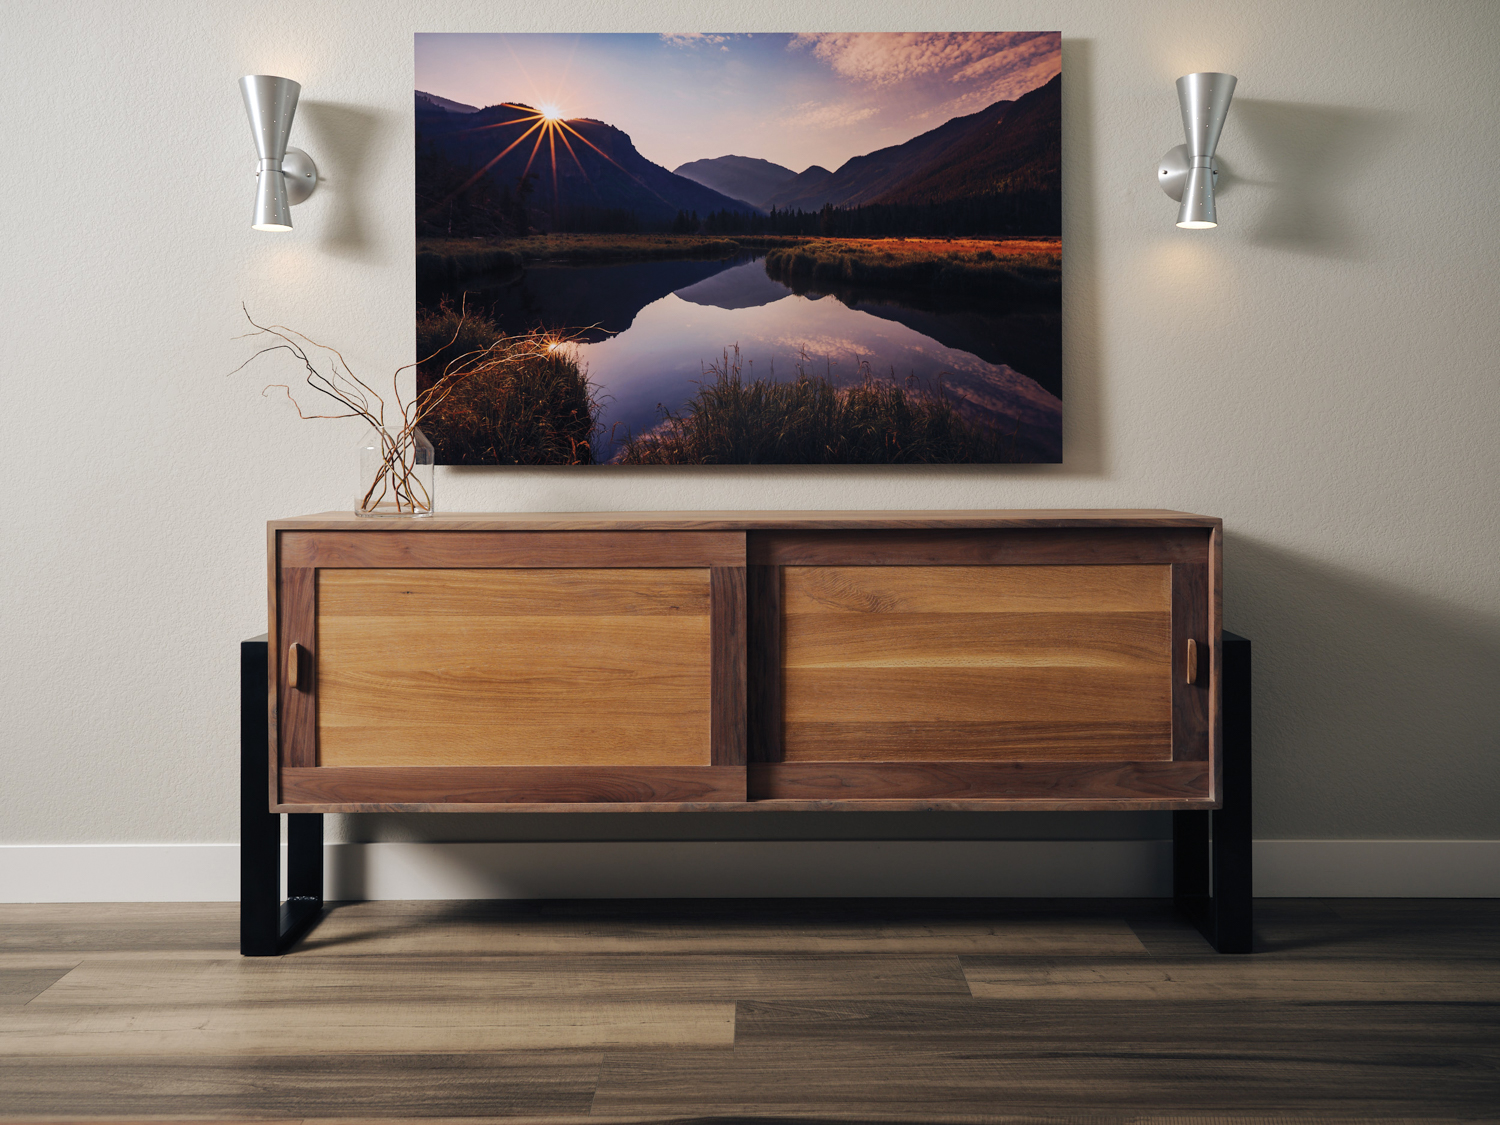 landscape photograph hanging over wooden credenza